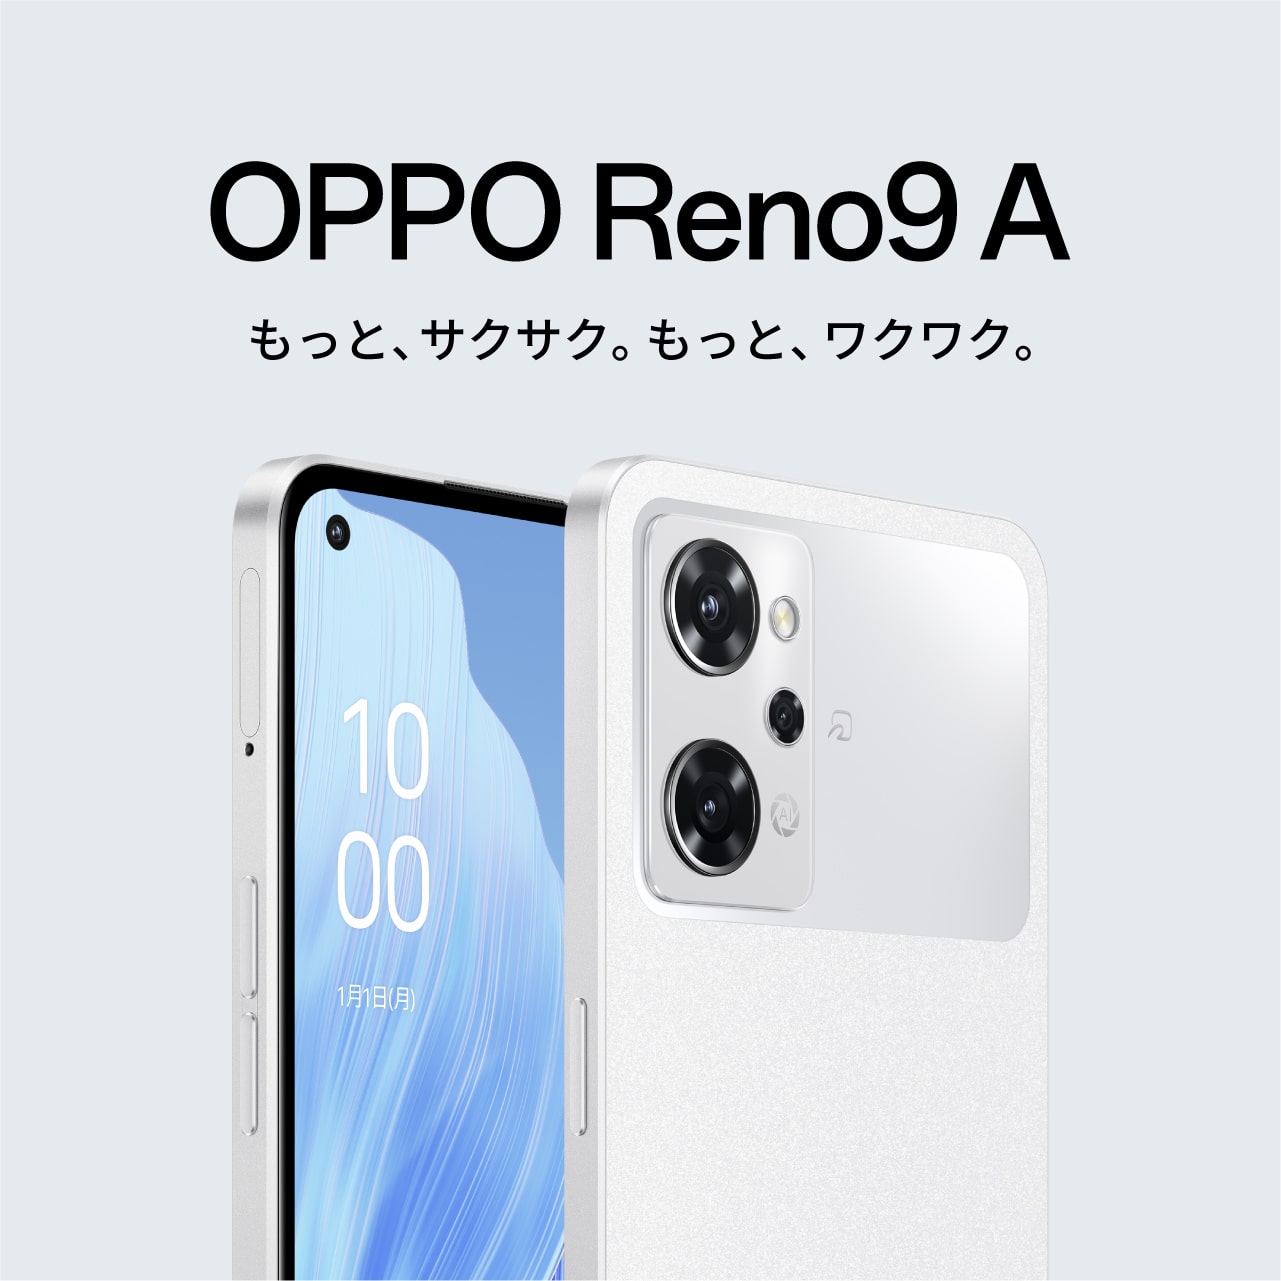 OPPO Reno9 A ムーンホワイト 128 GB SIMフリー - 携帯電話